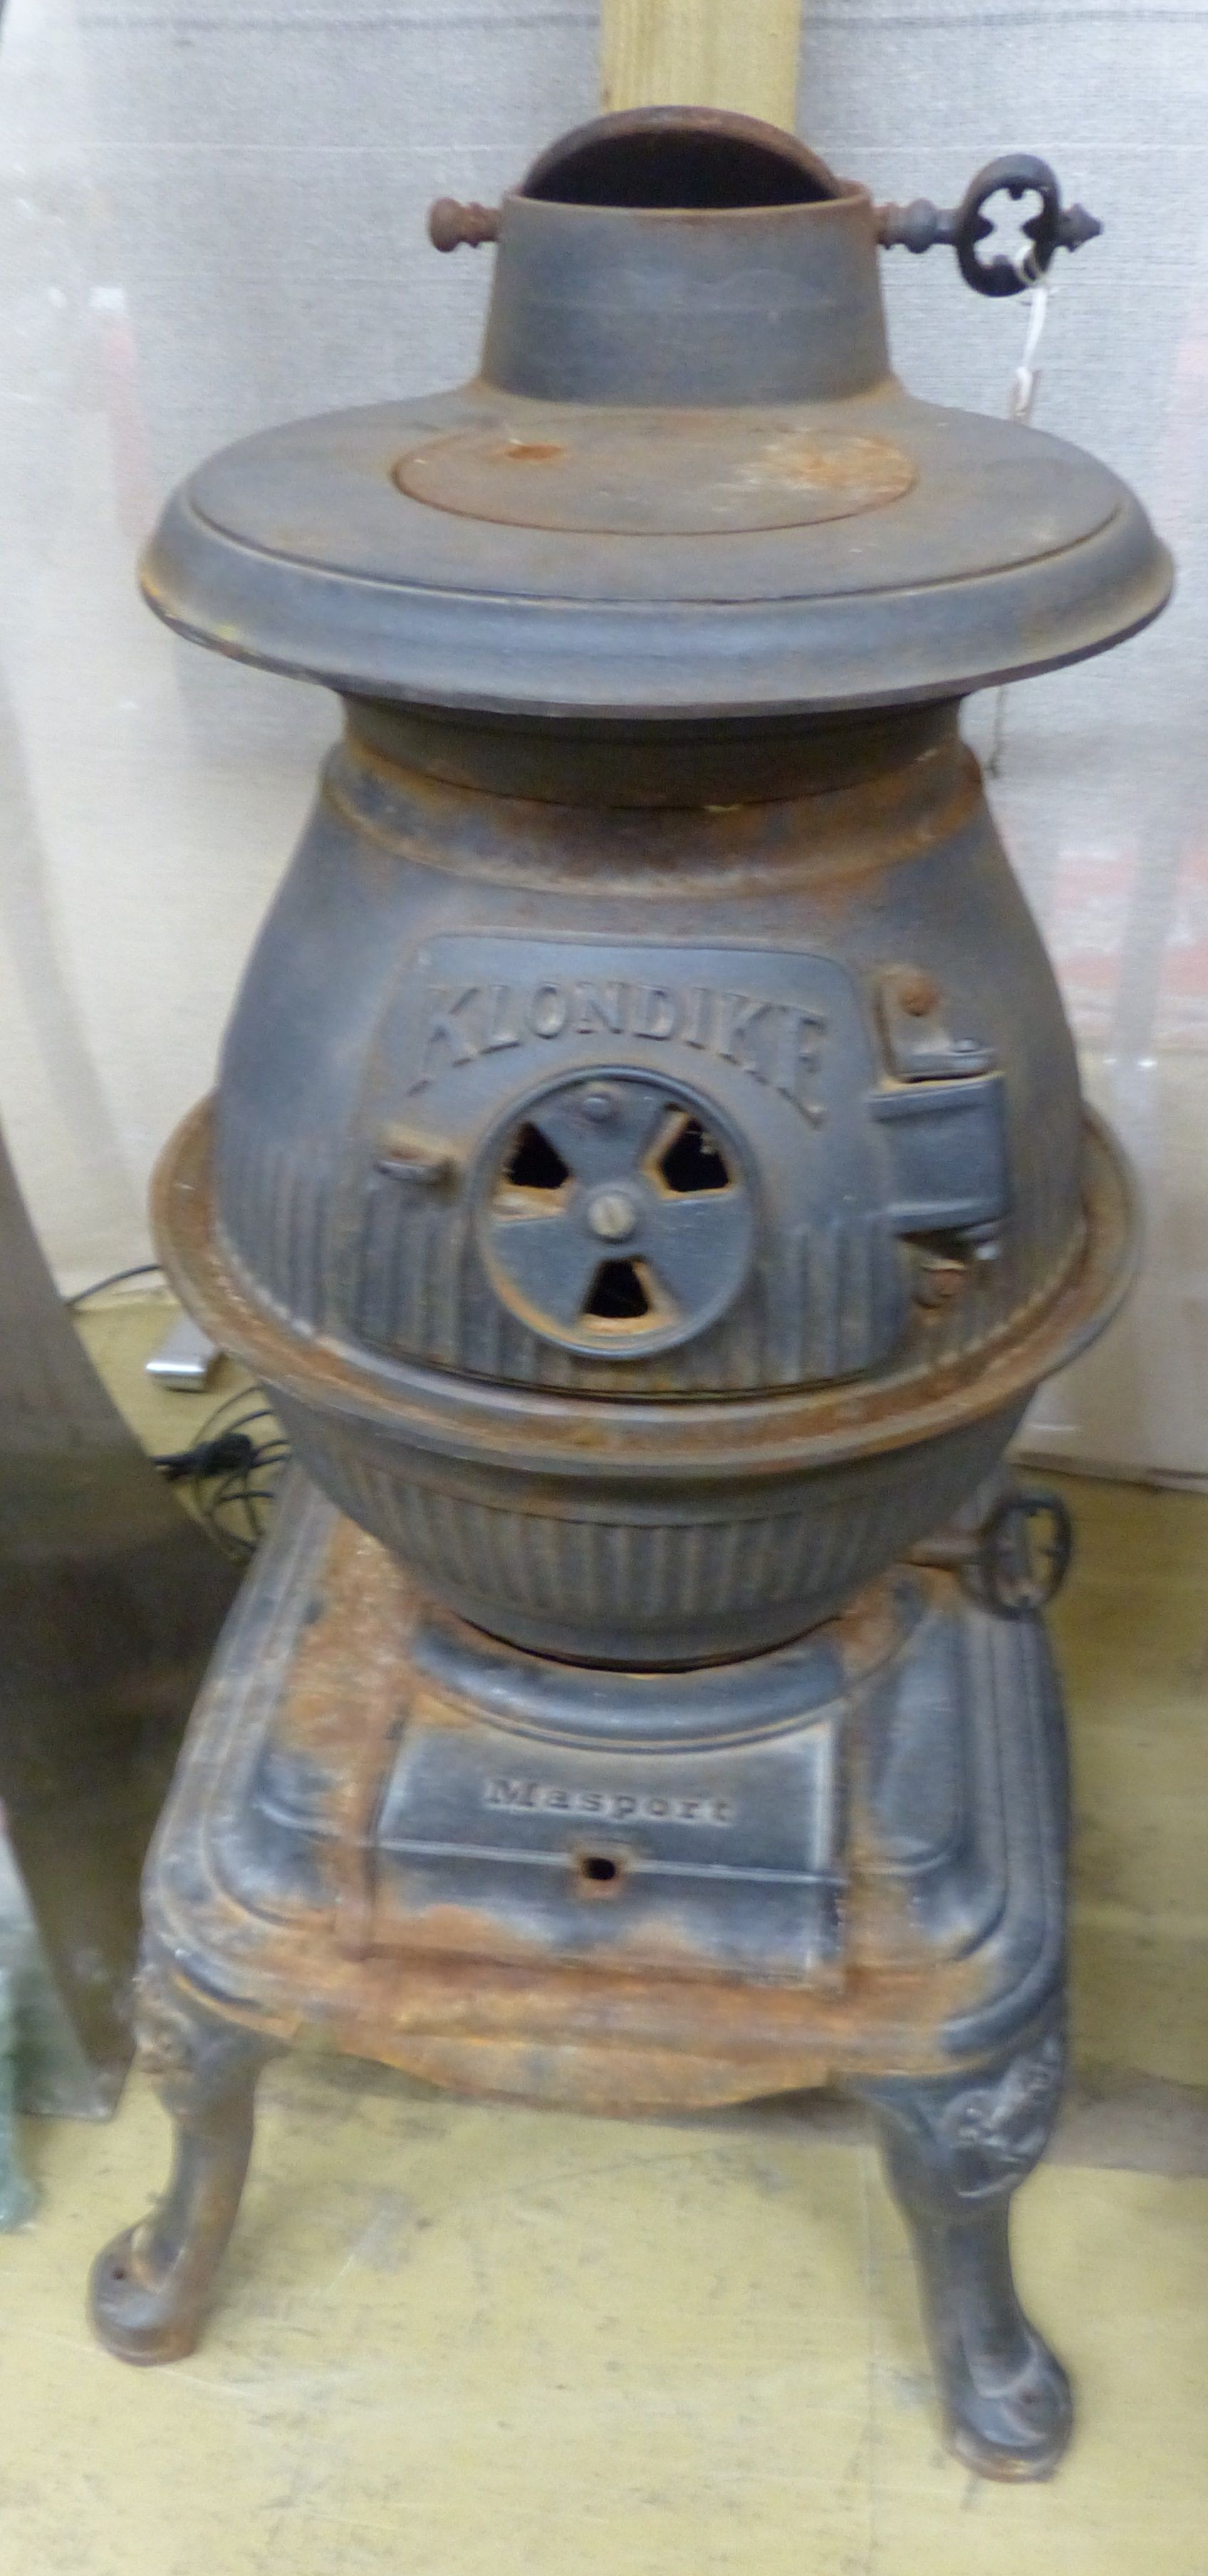 A Klondike cast iron stove, H.76cm